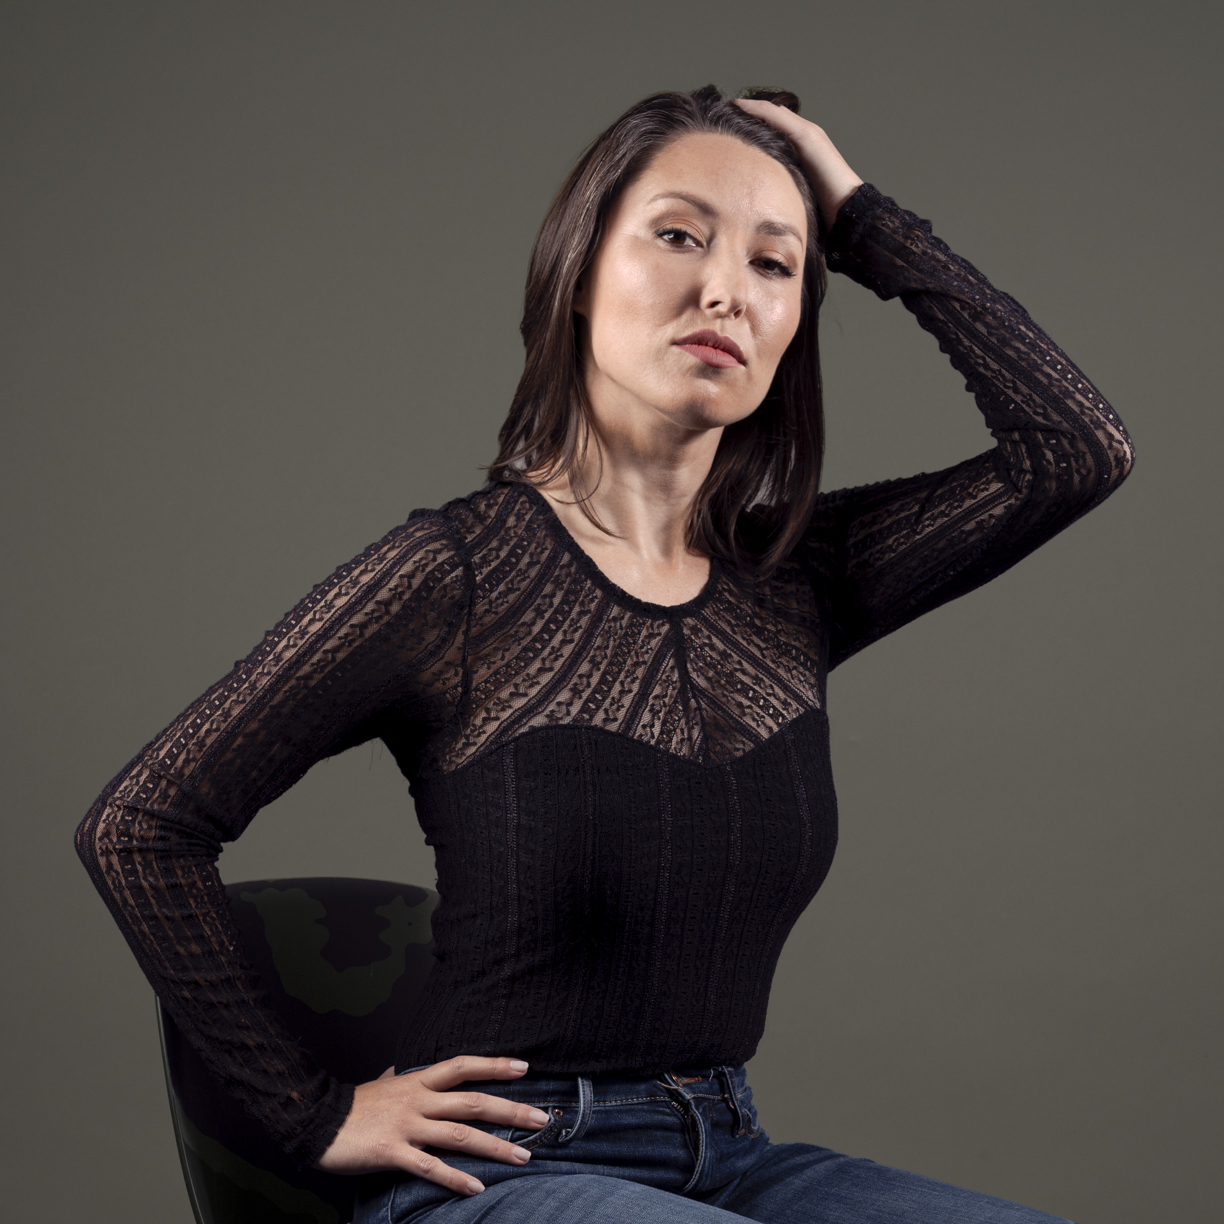 Color portrait of attractive woman wearing black partial lace top.